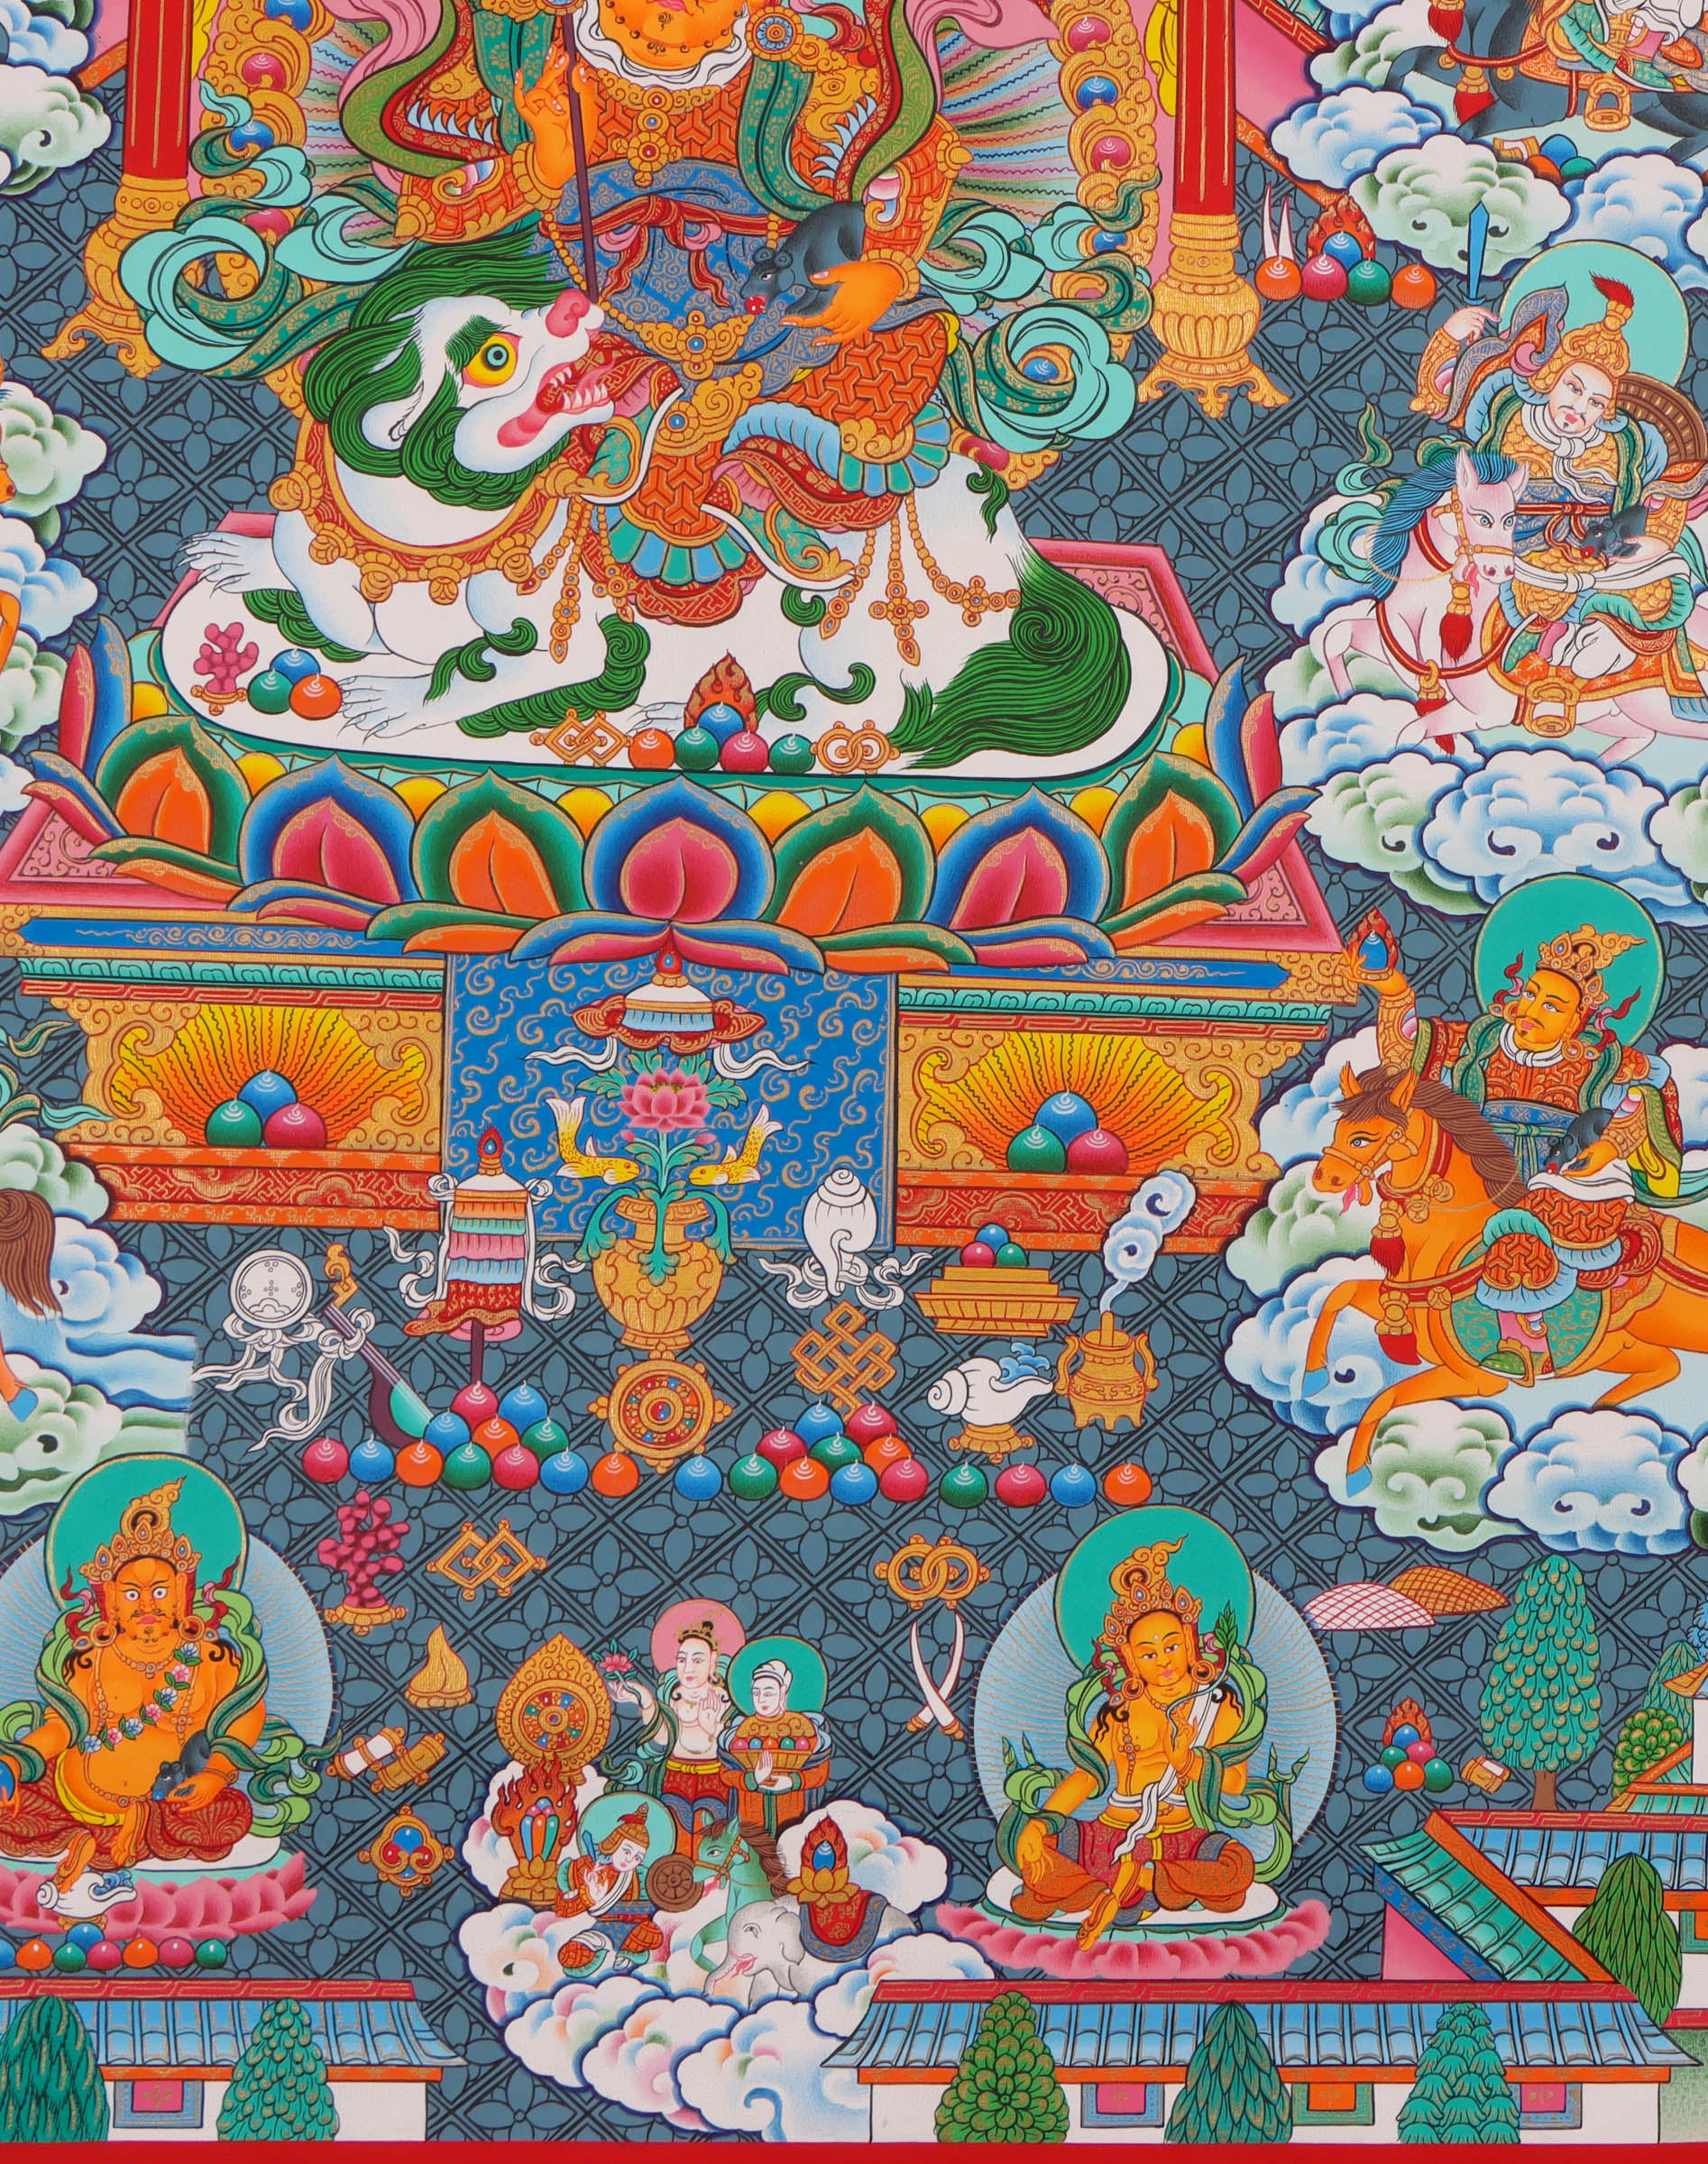 Zambala Thangka Painting with many other bodhisattva deities - Handpainted by skillful artisan - Lapis Thangka Art